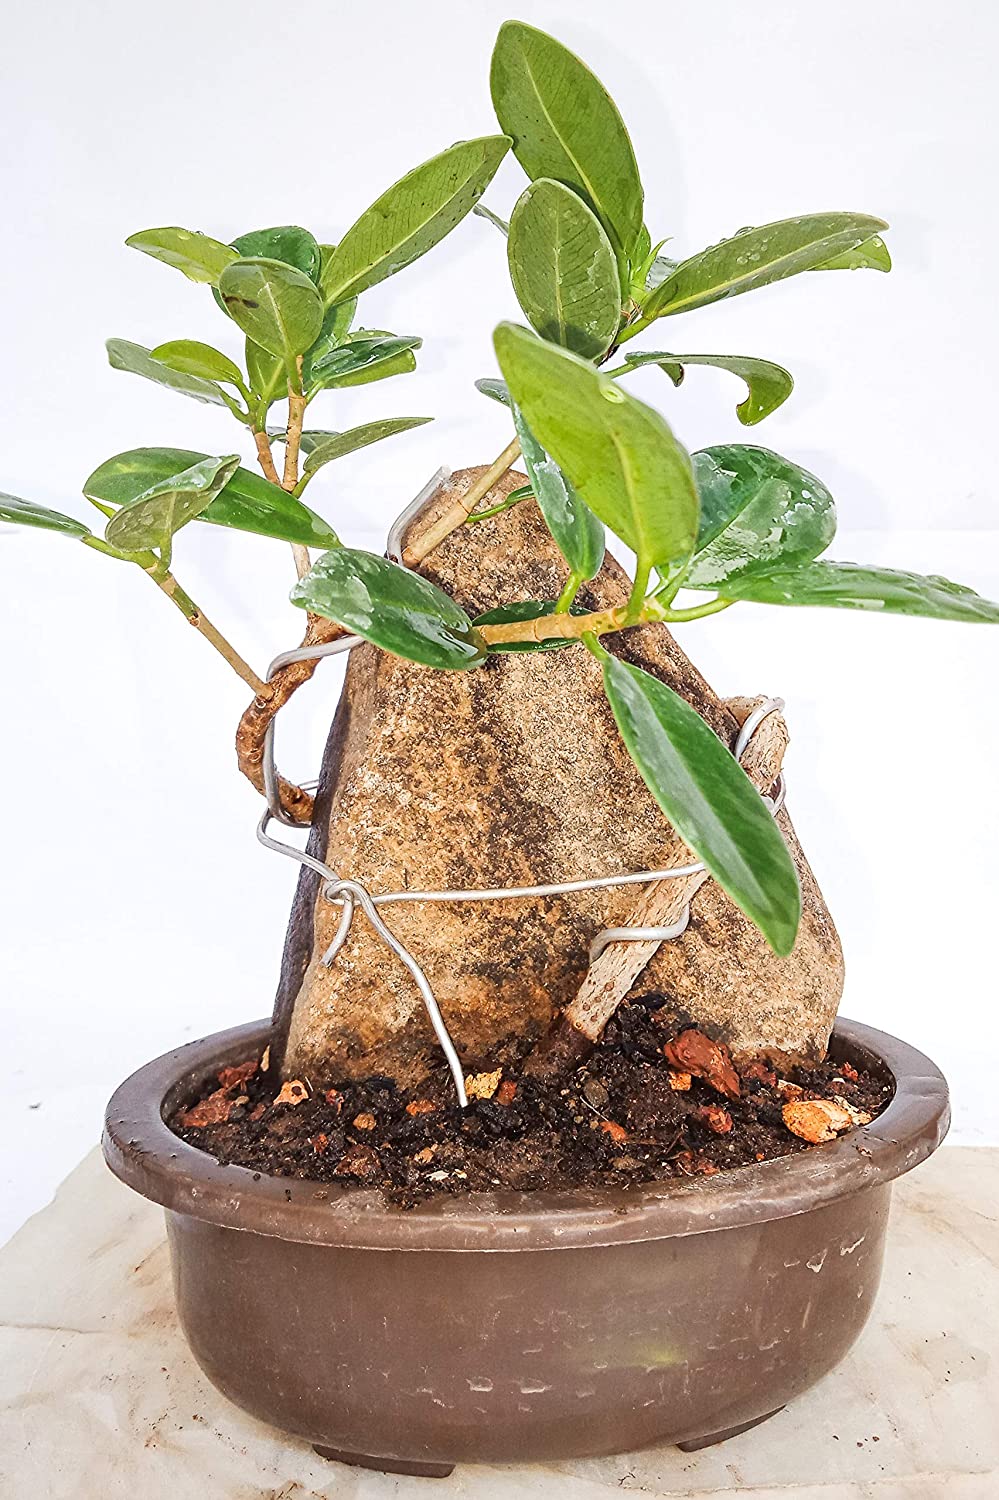 Ficus Long Island Mini Banyan with The Rock 2 Year Old Live Small Bonsai Tree